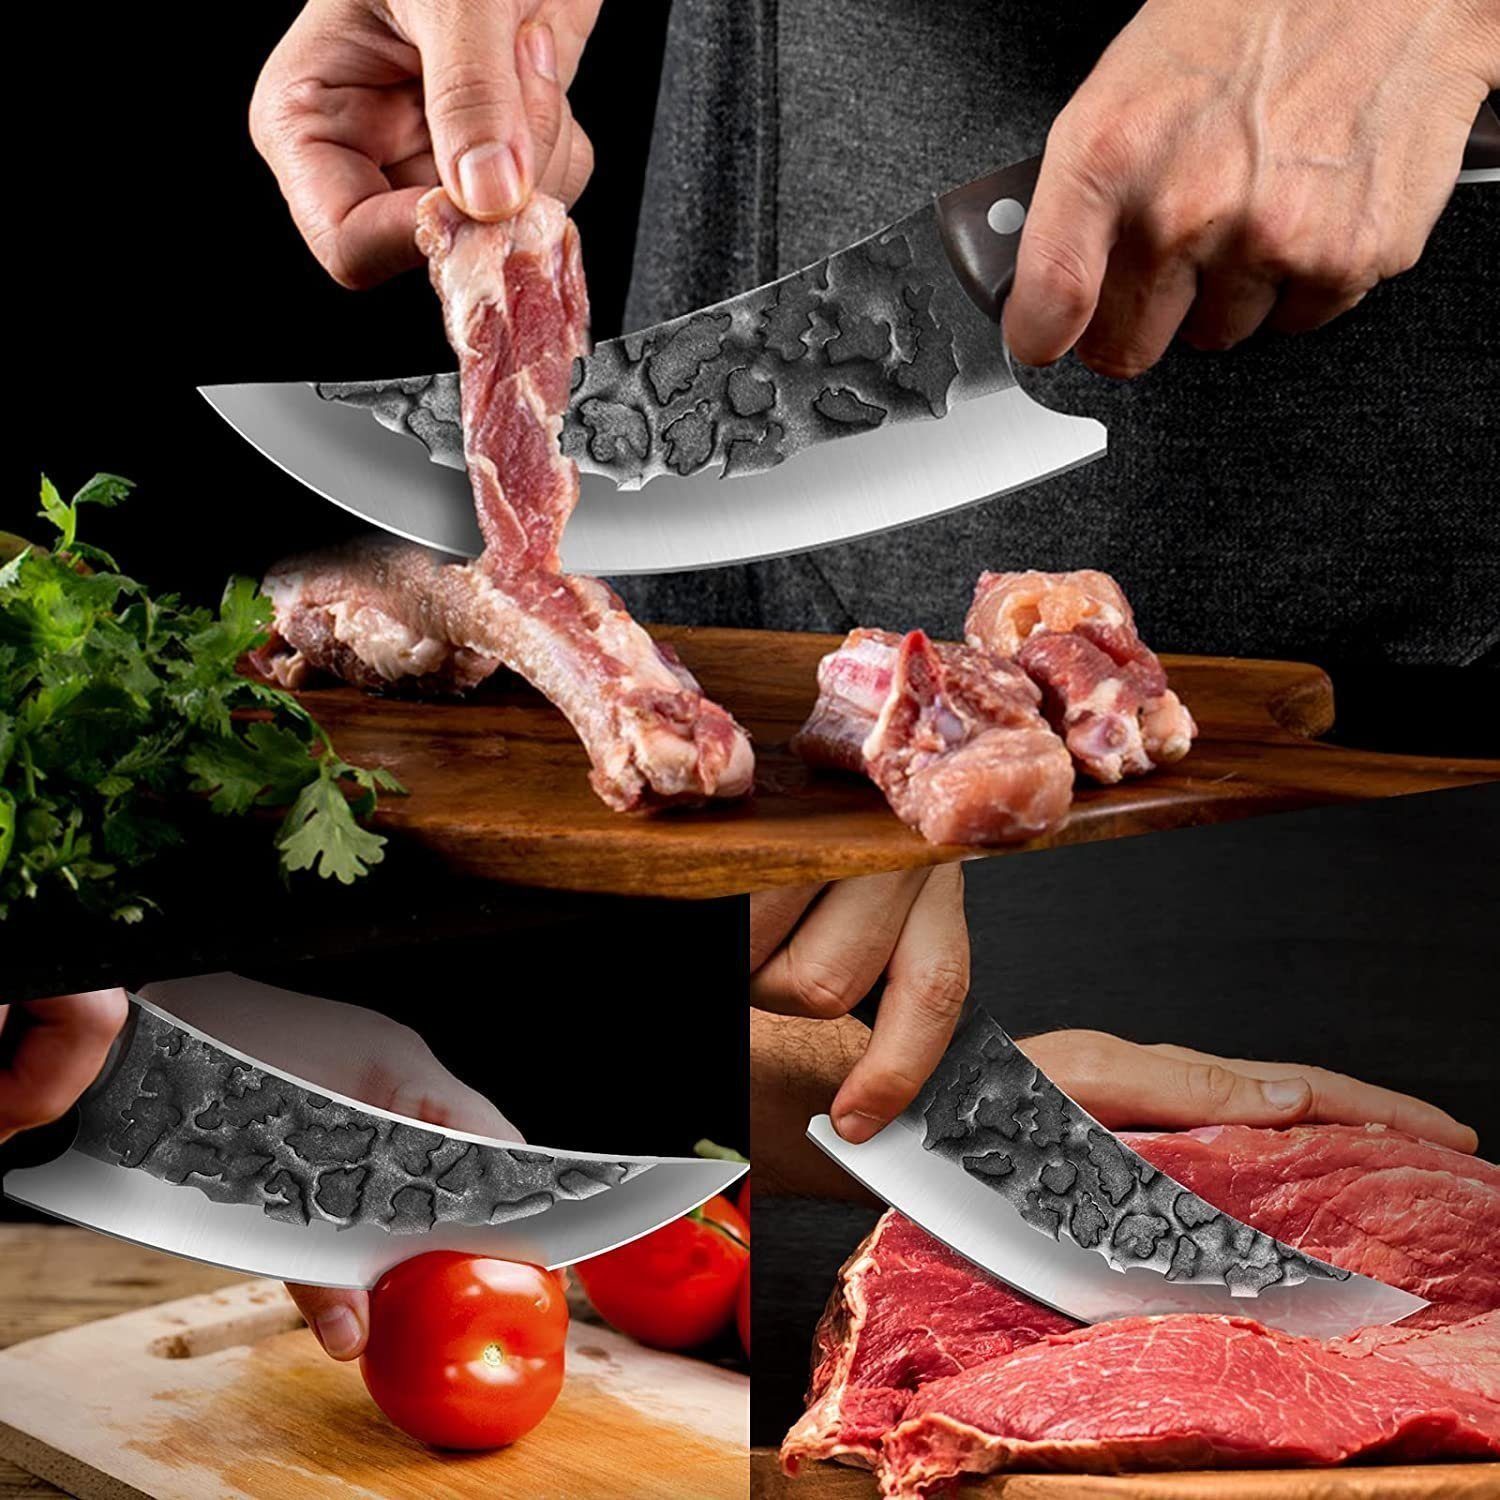 Messer Messer KEENZO Outdoor Ausbeinmesser Grillmesser Handgeschmiedet Chefmesser Wikinger